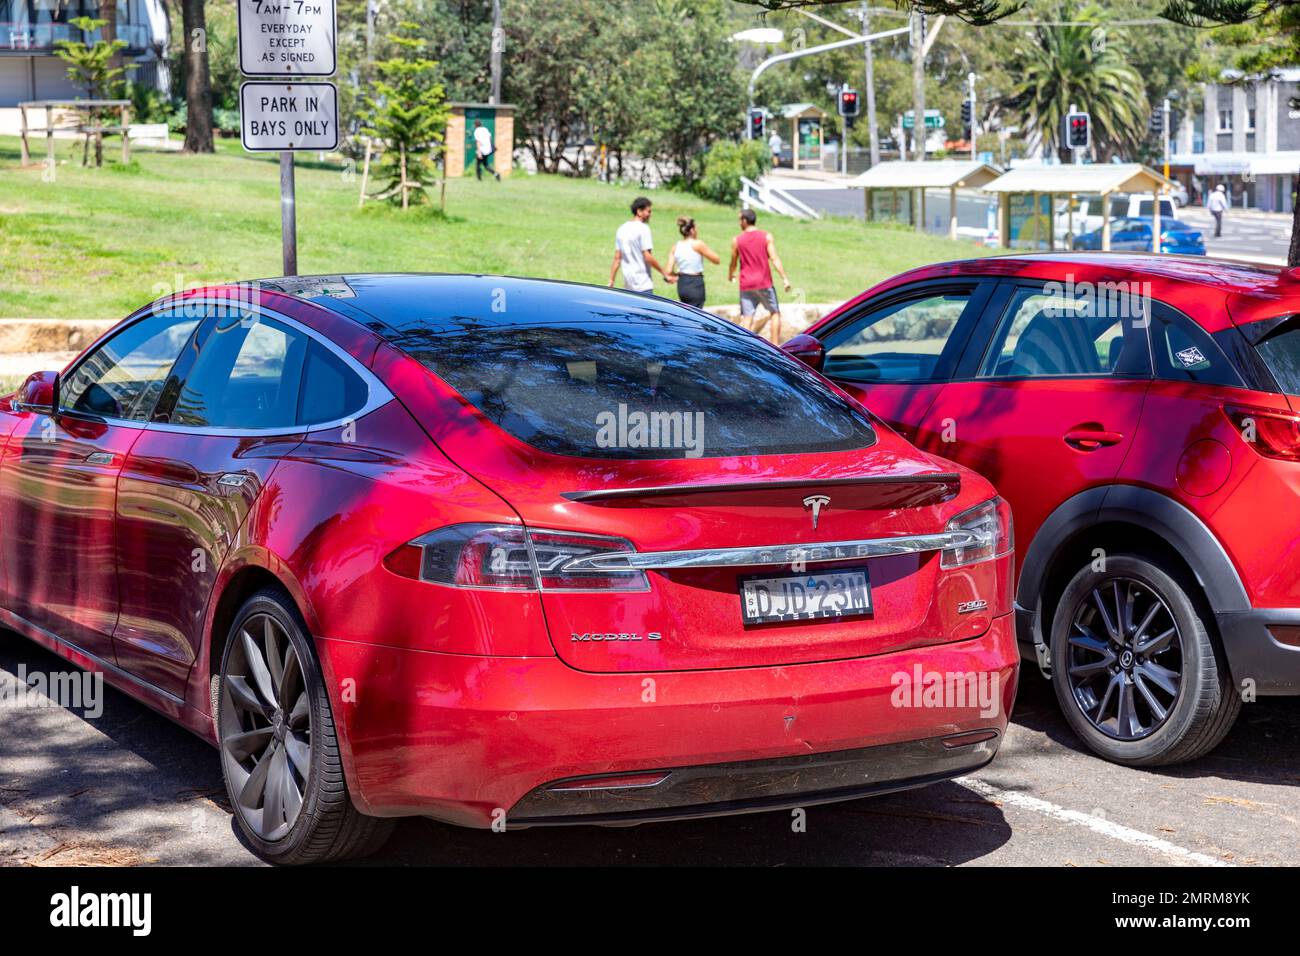 Tesla Model S car, 2016 year model, parked at a Sydney beach car park, electric vehicle EV, Sydney,NSW,Australia Stock Photo